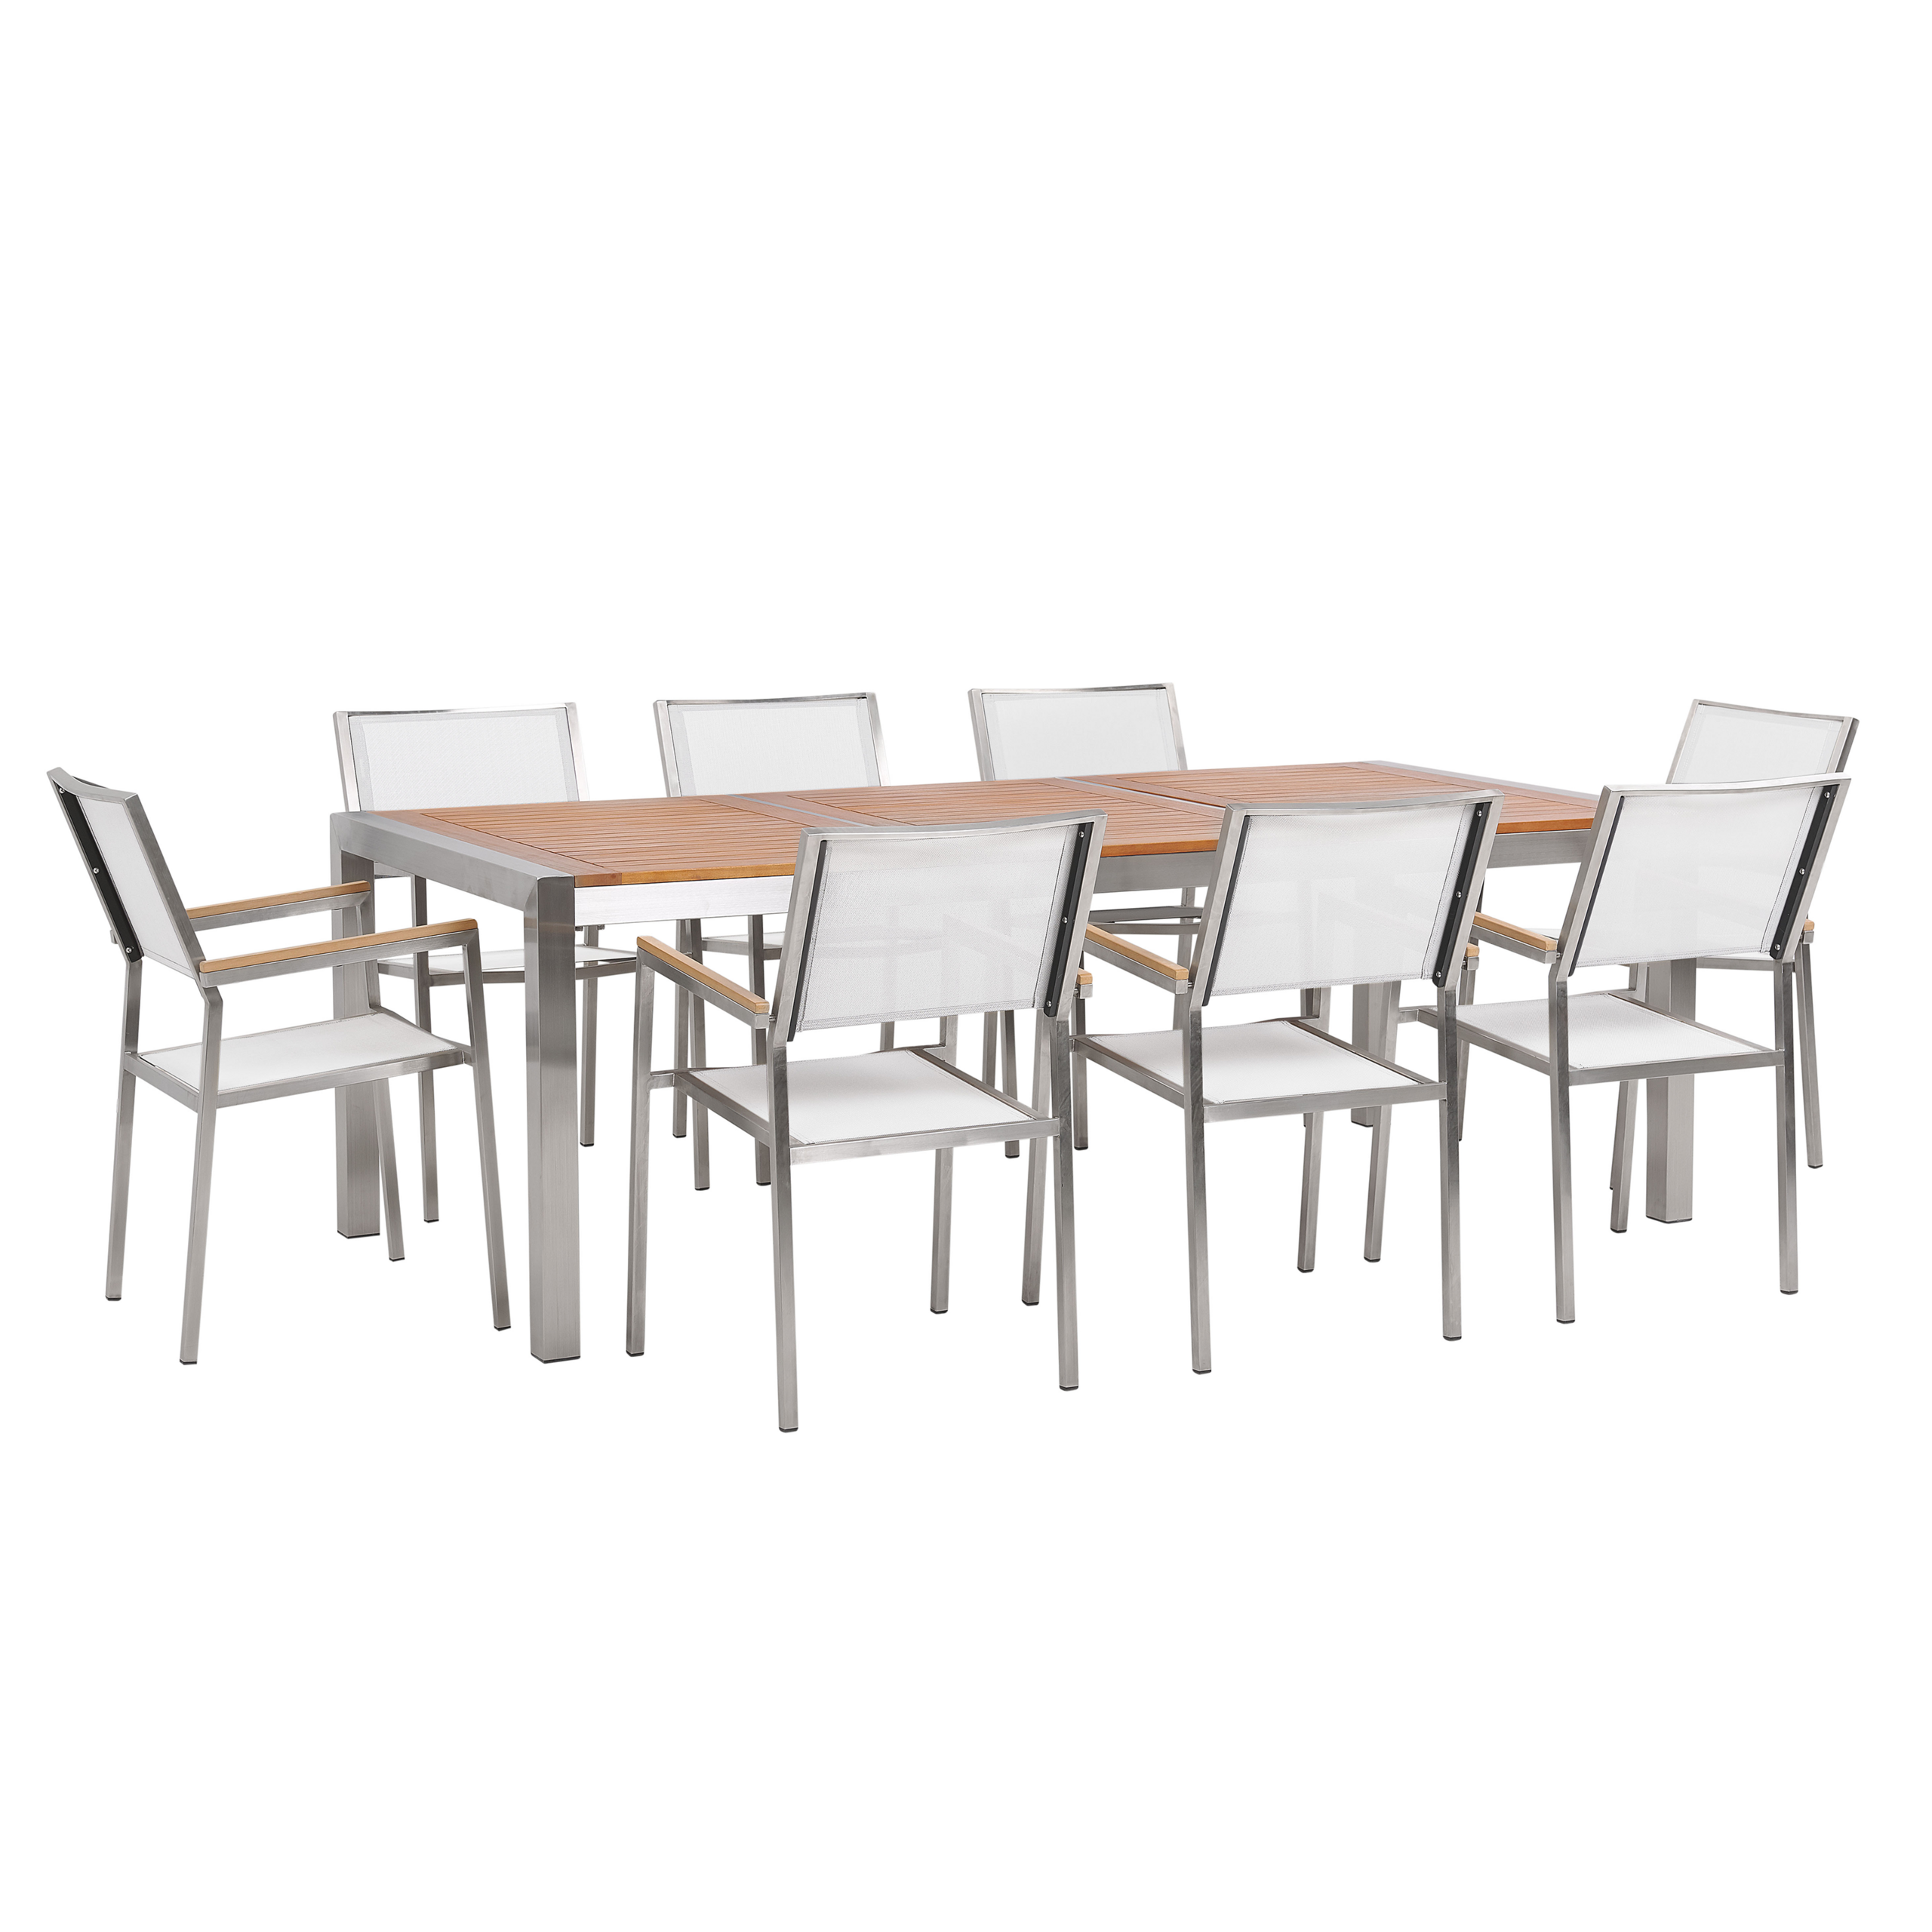 Beliani Garden Dining Set Light Eucalyptus Wood Top Steel Frame 220 x 100 cm with 8 White Chairs